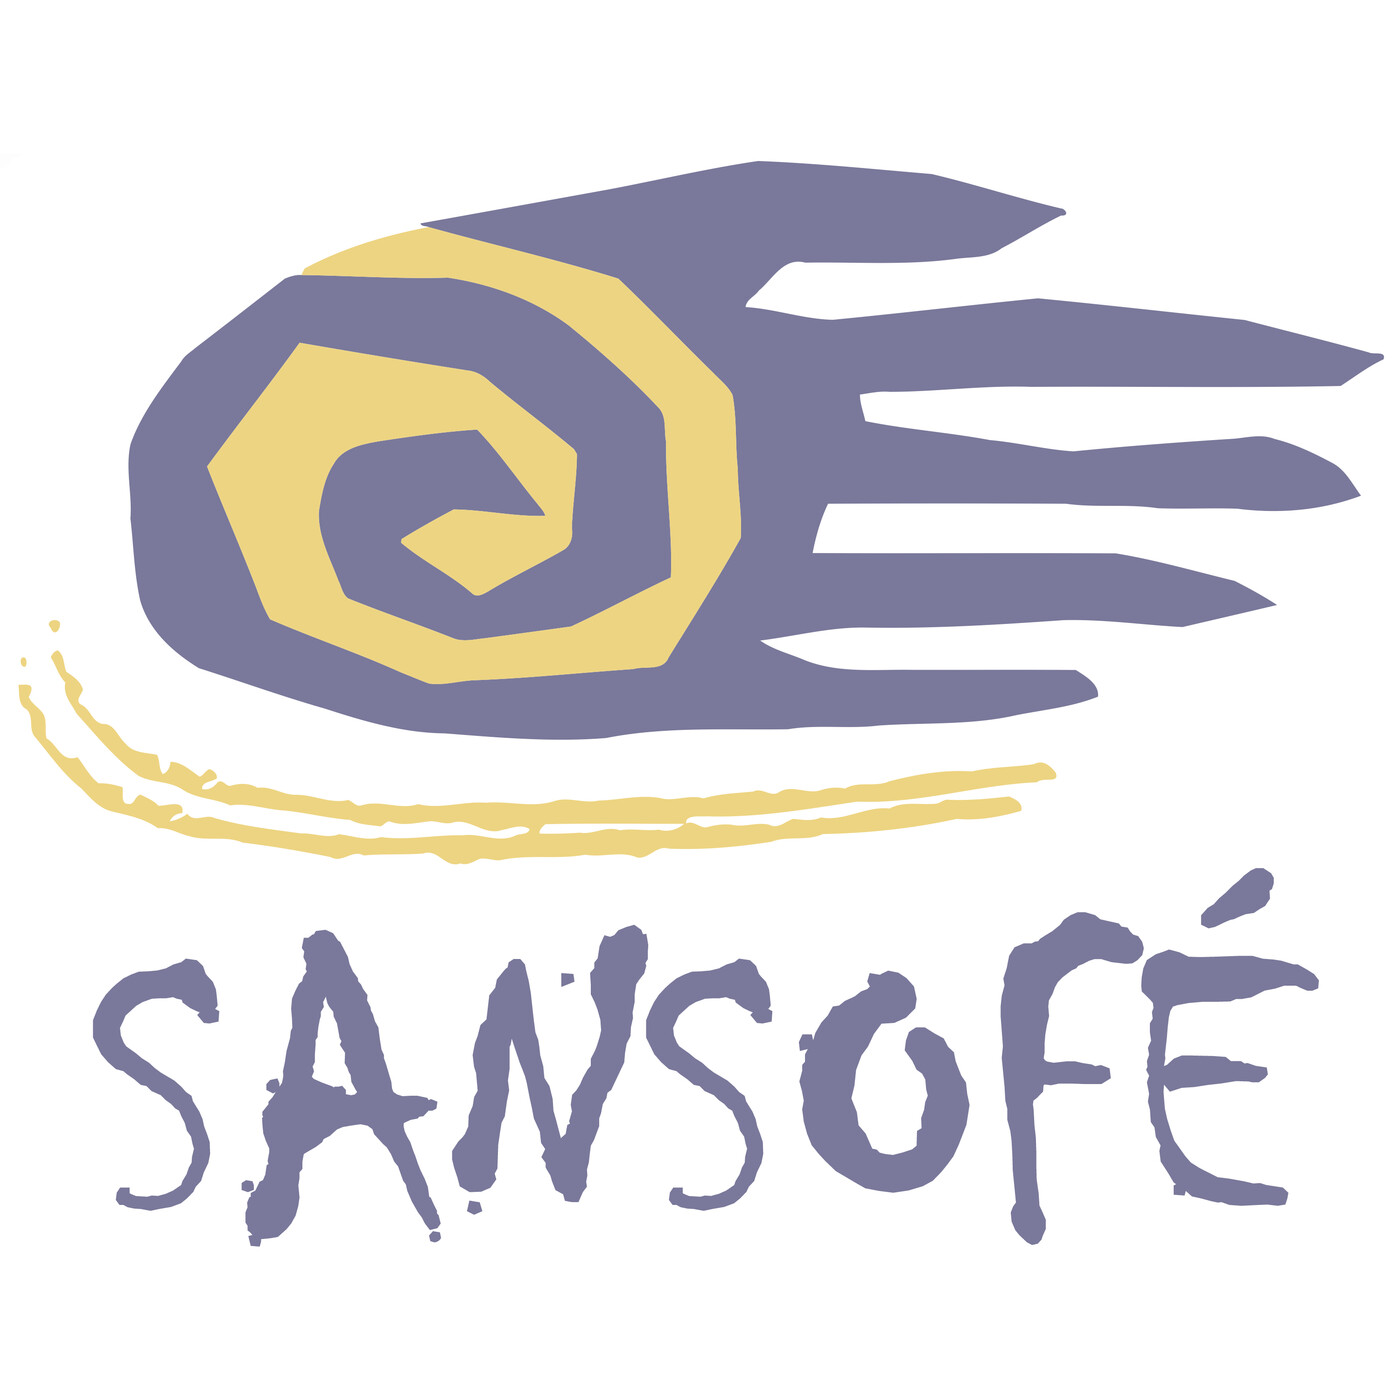 Sansofé